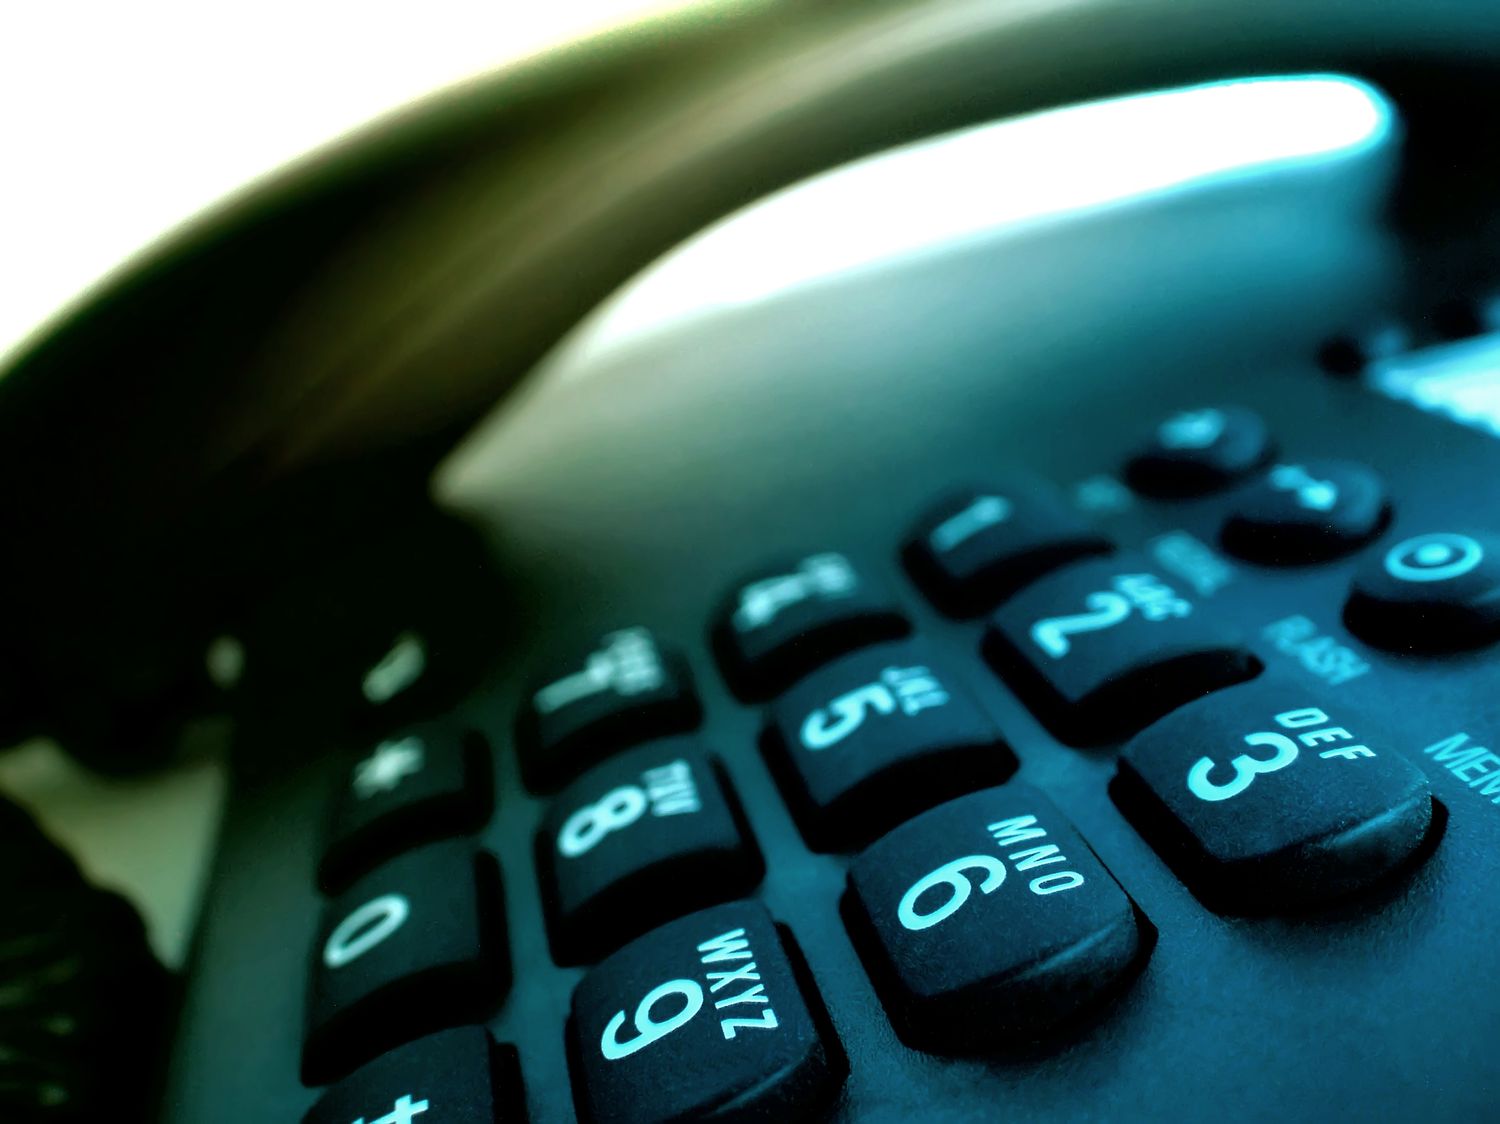 NPC introduces hotline for ‘police complaints’